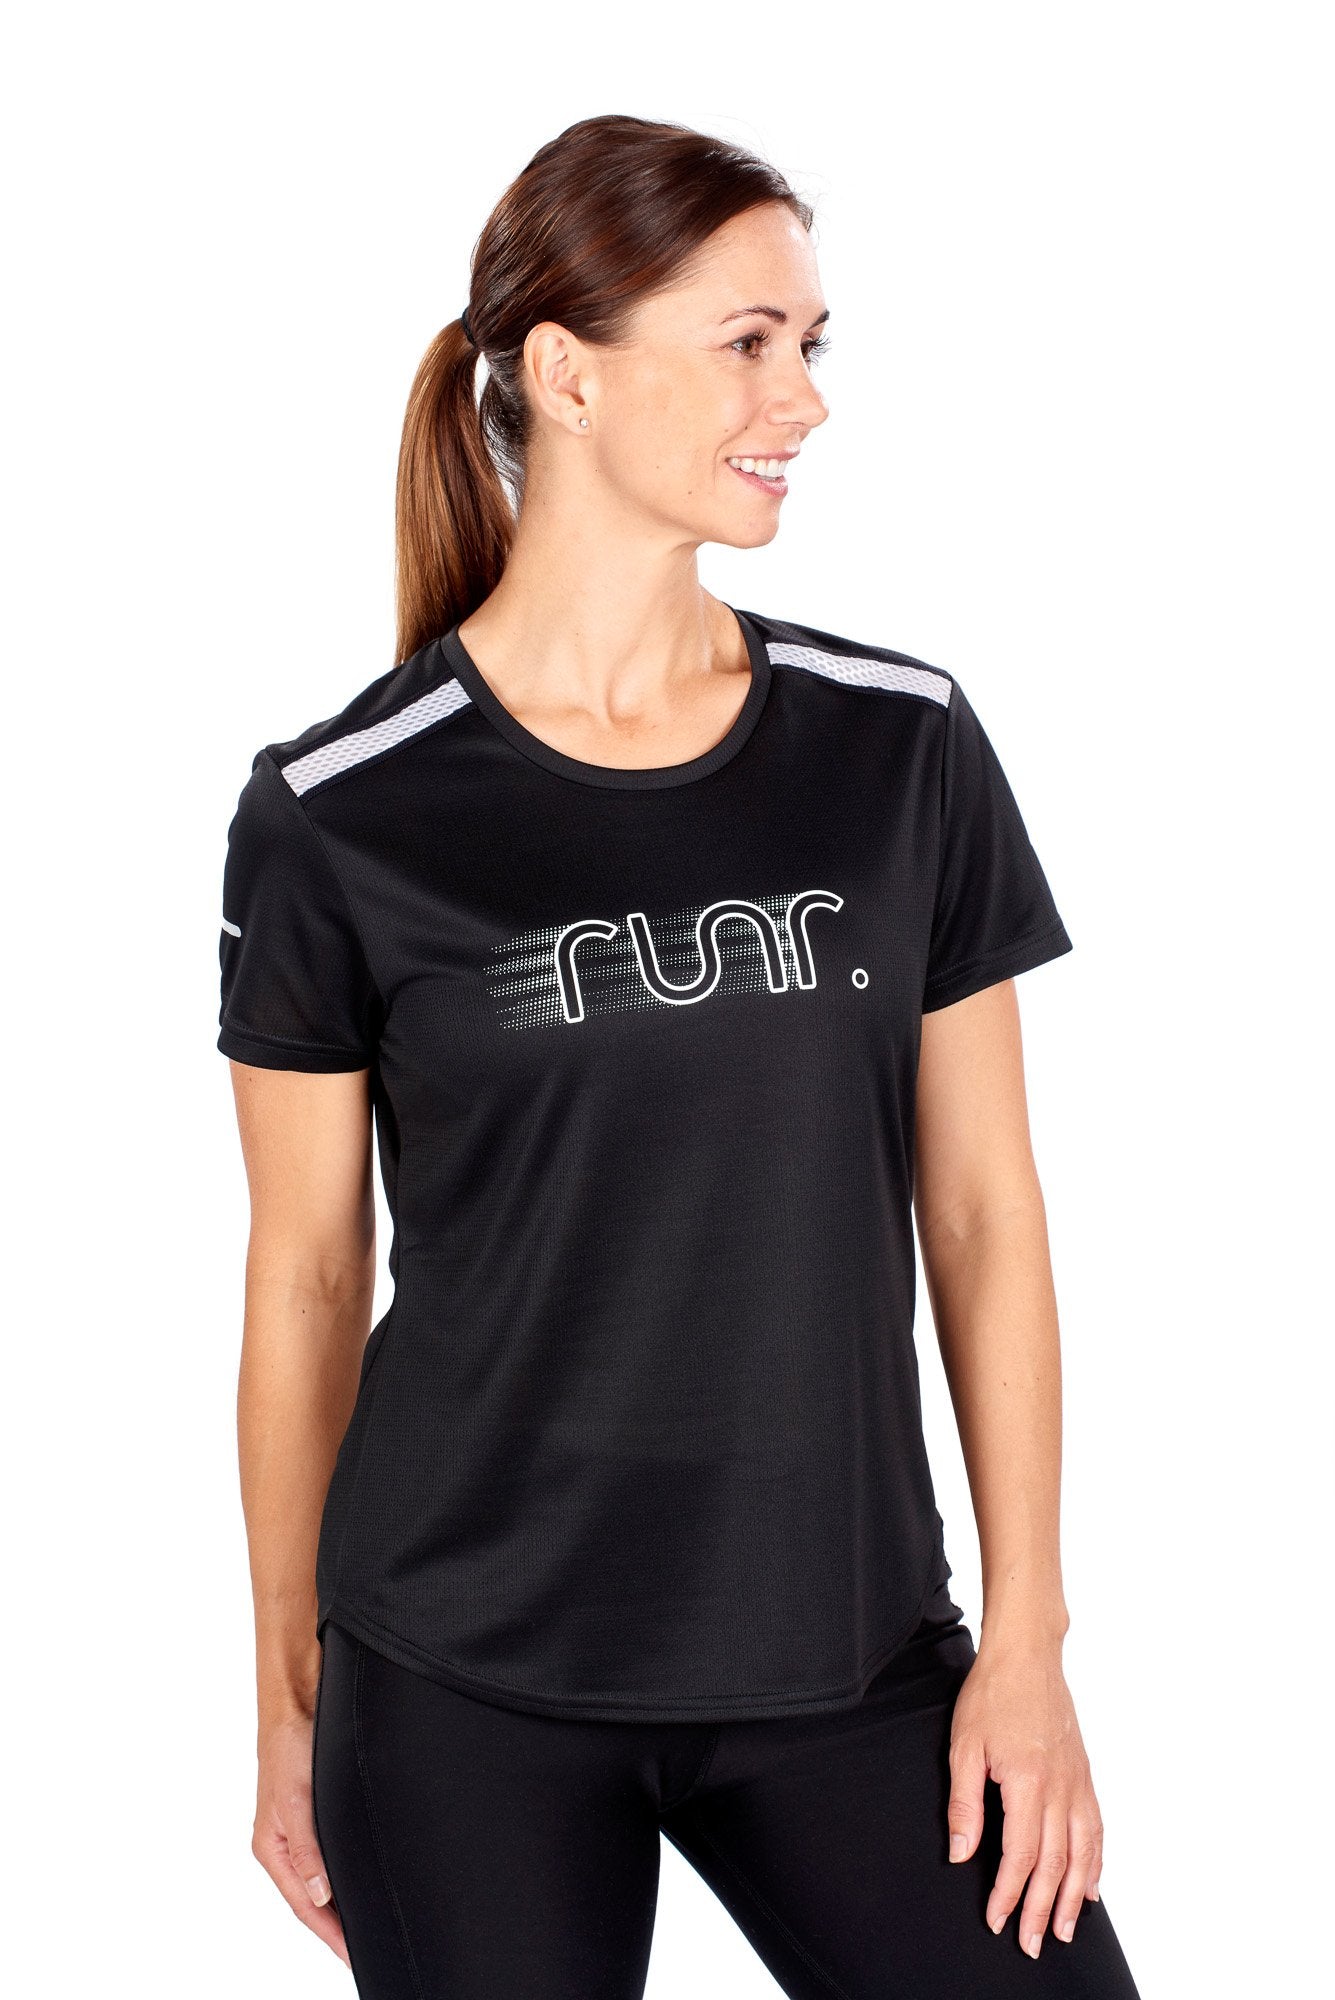 Women's EcoTek Runr Technical T-Shirt - Black